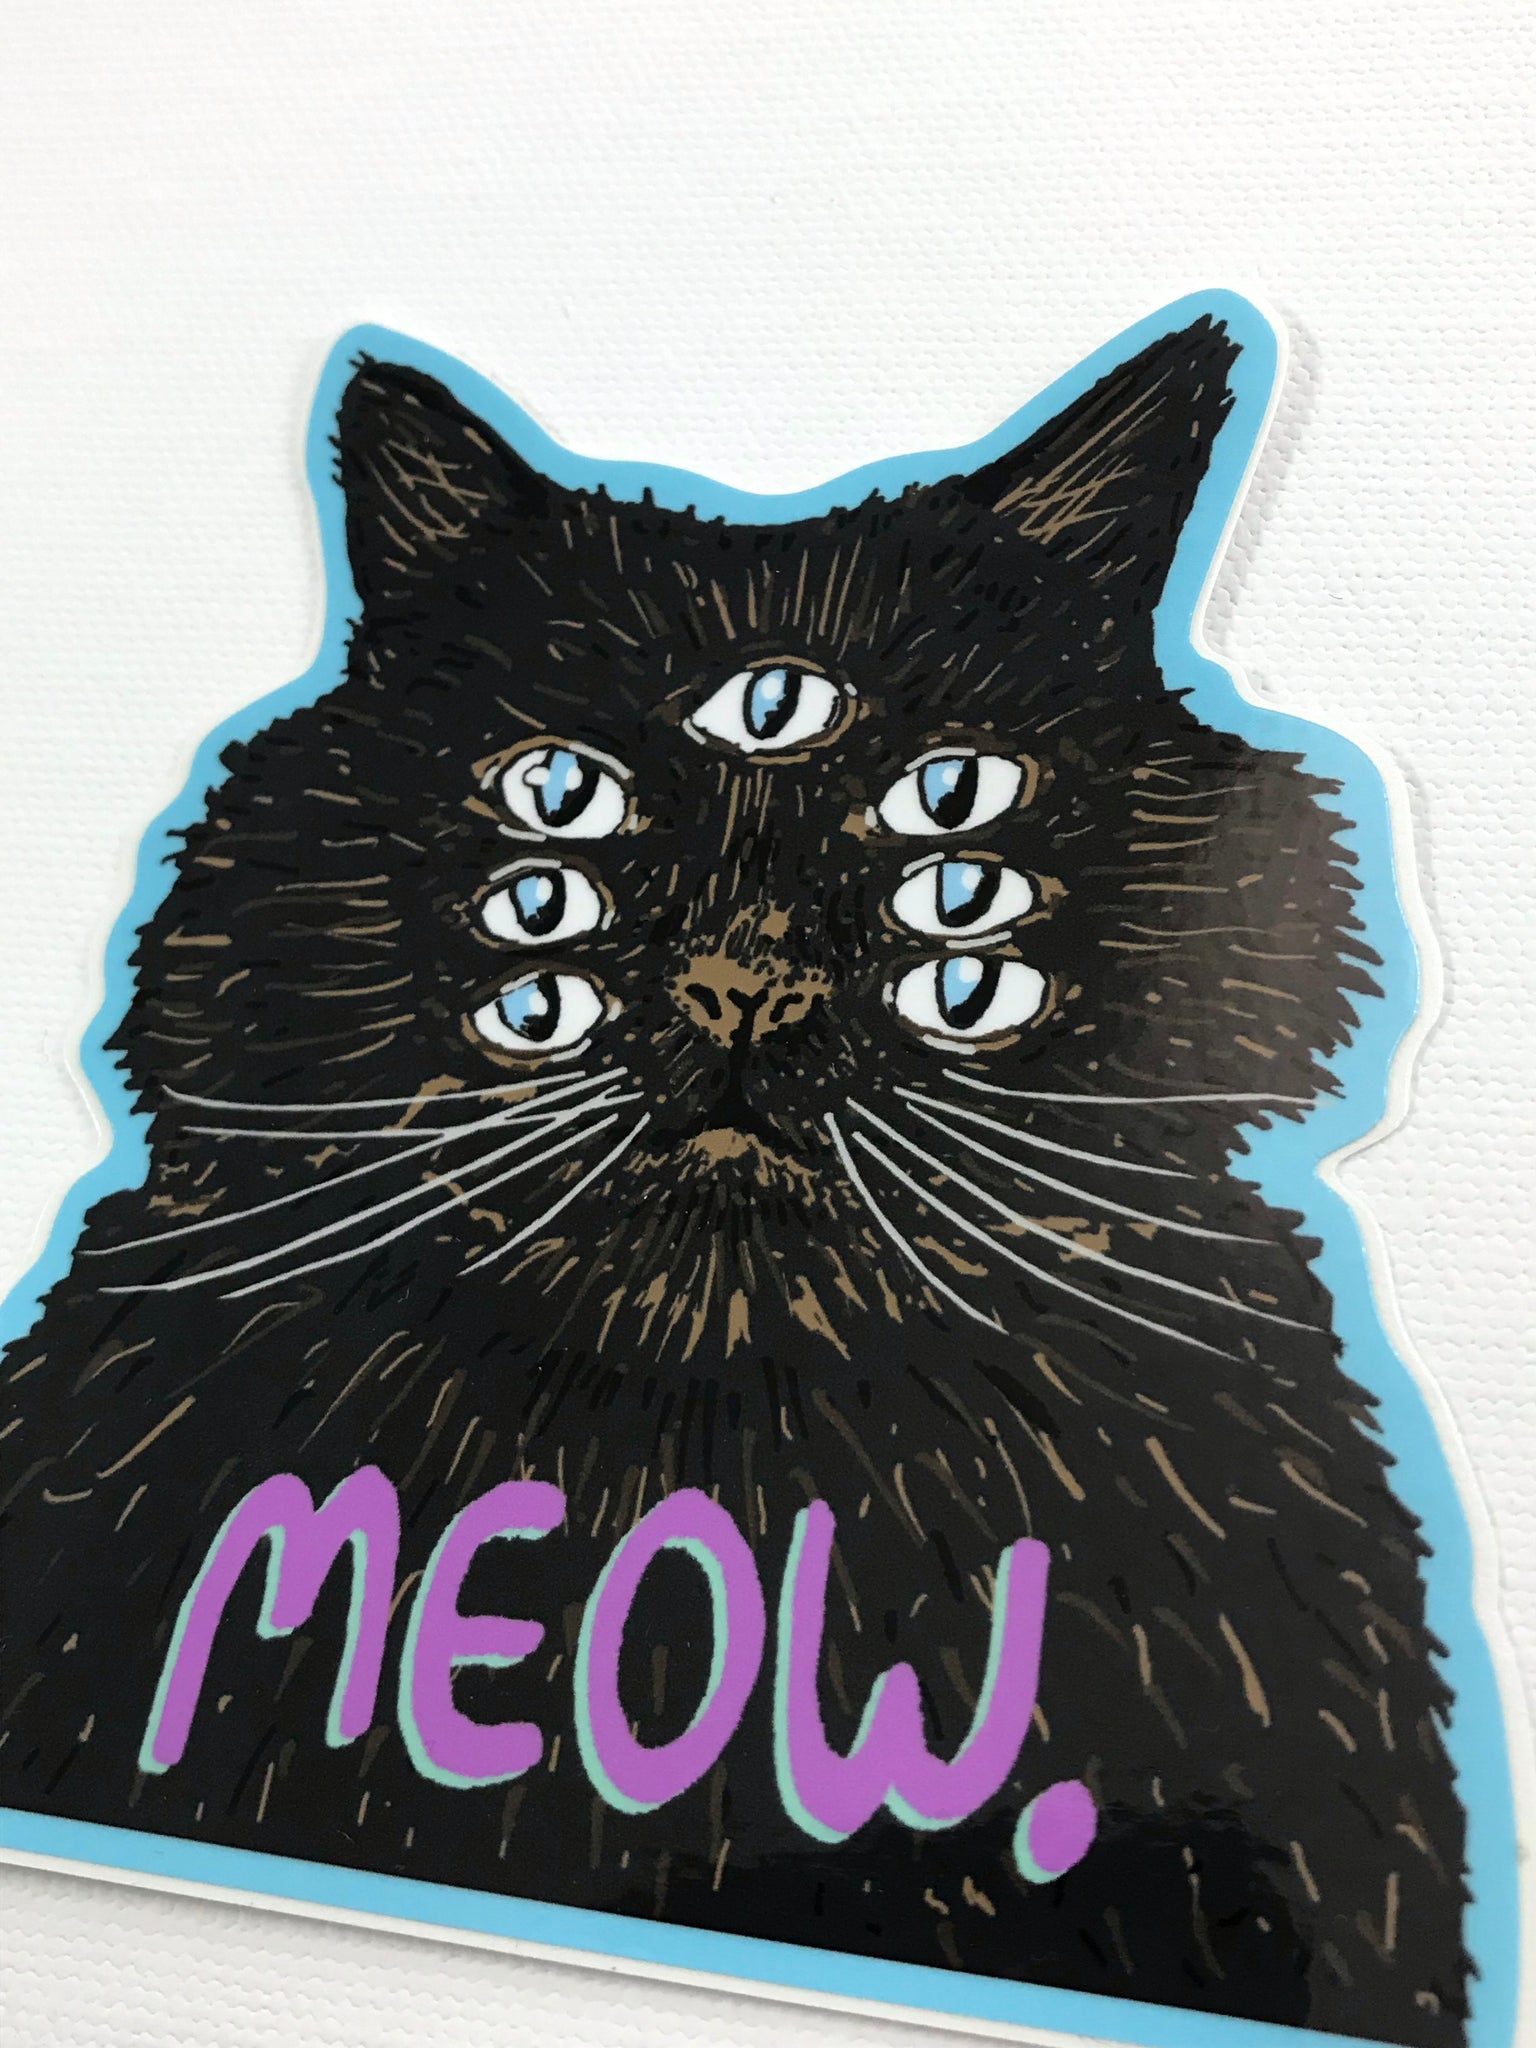 Meow Cat Sticker